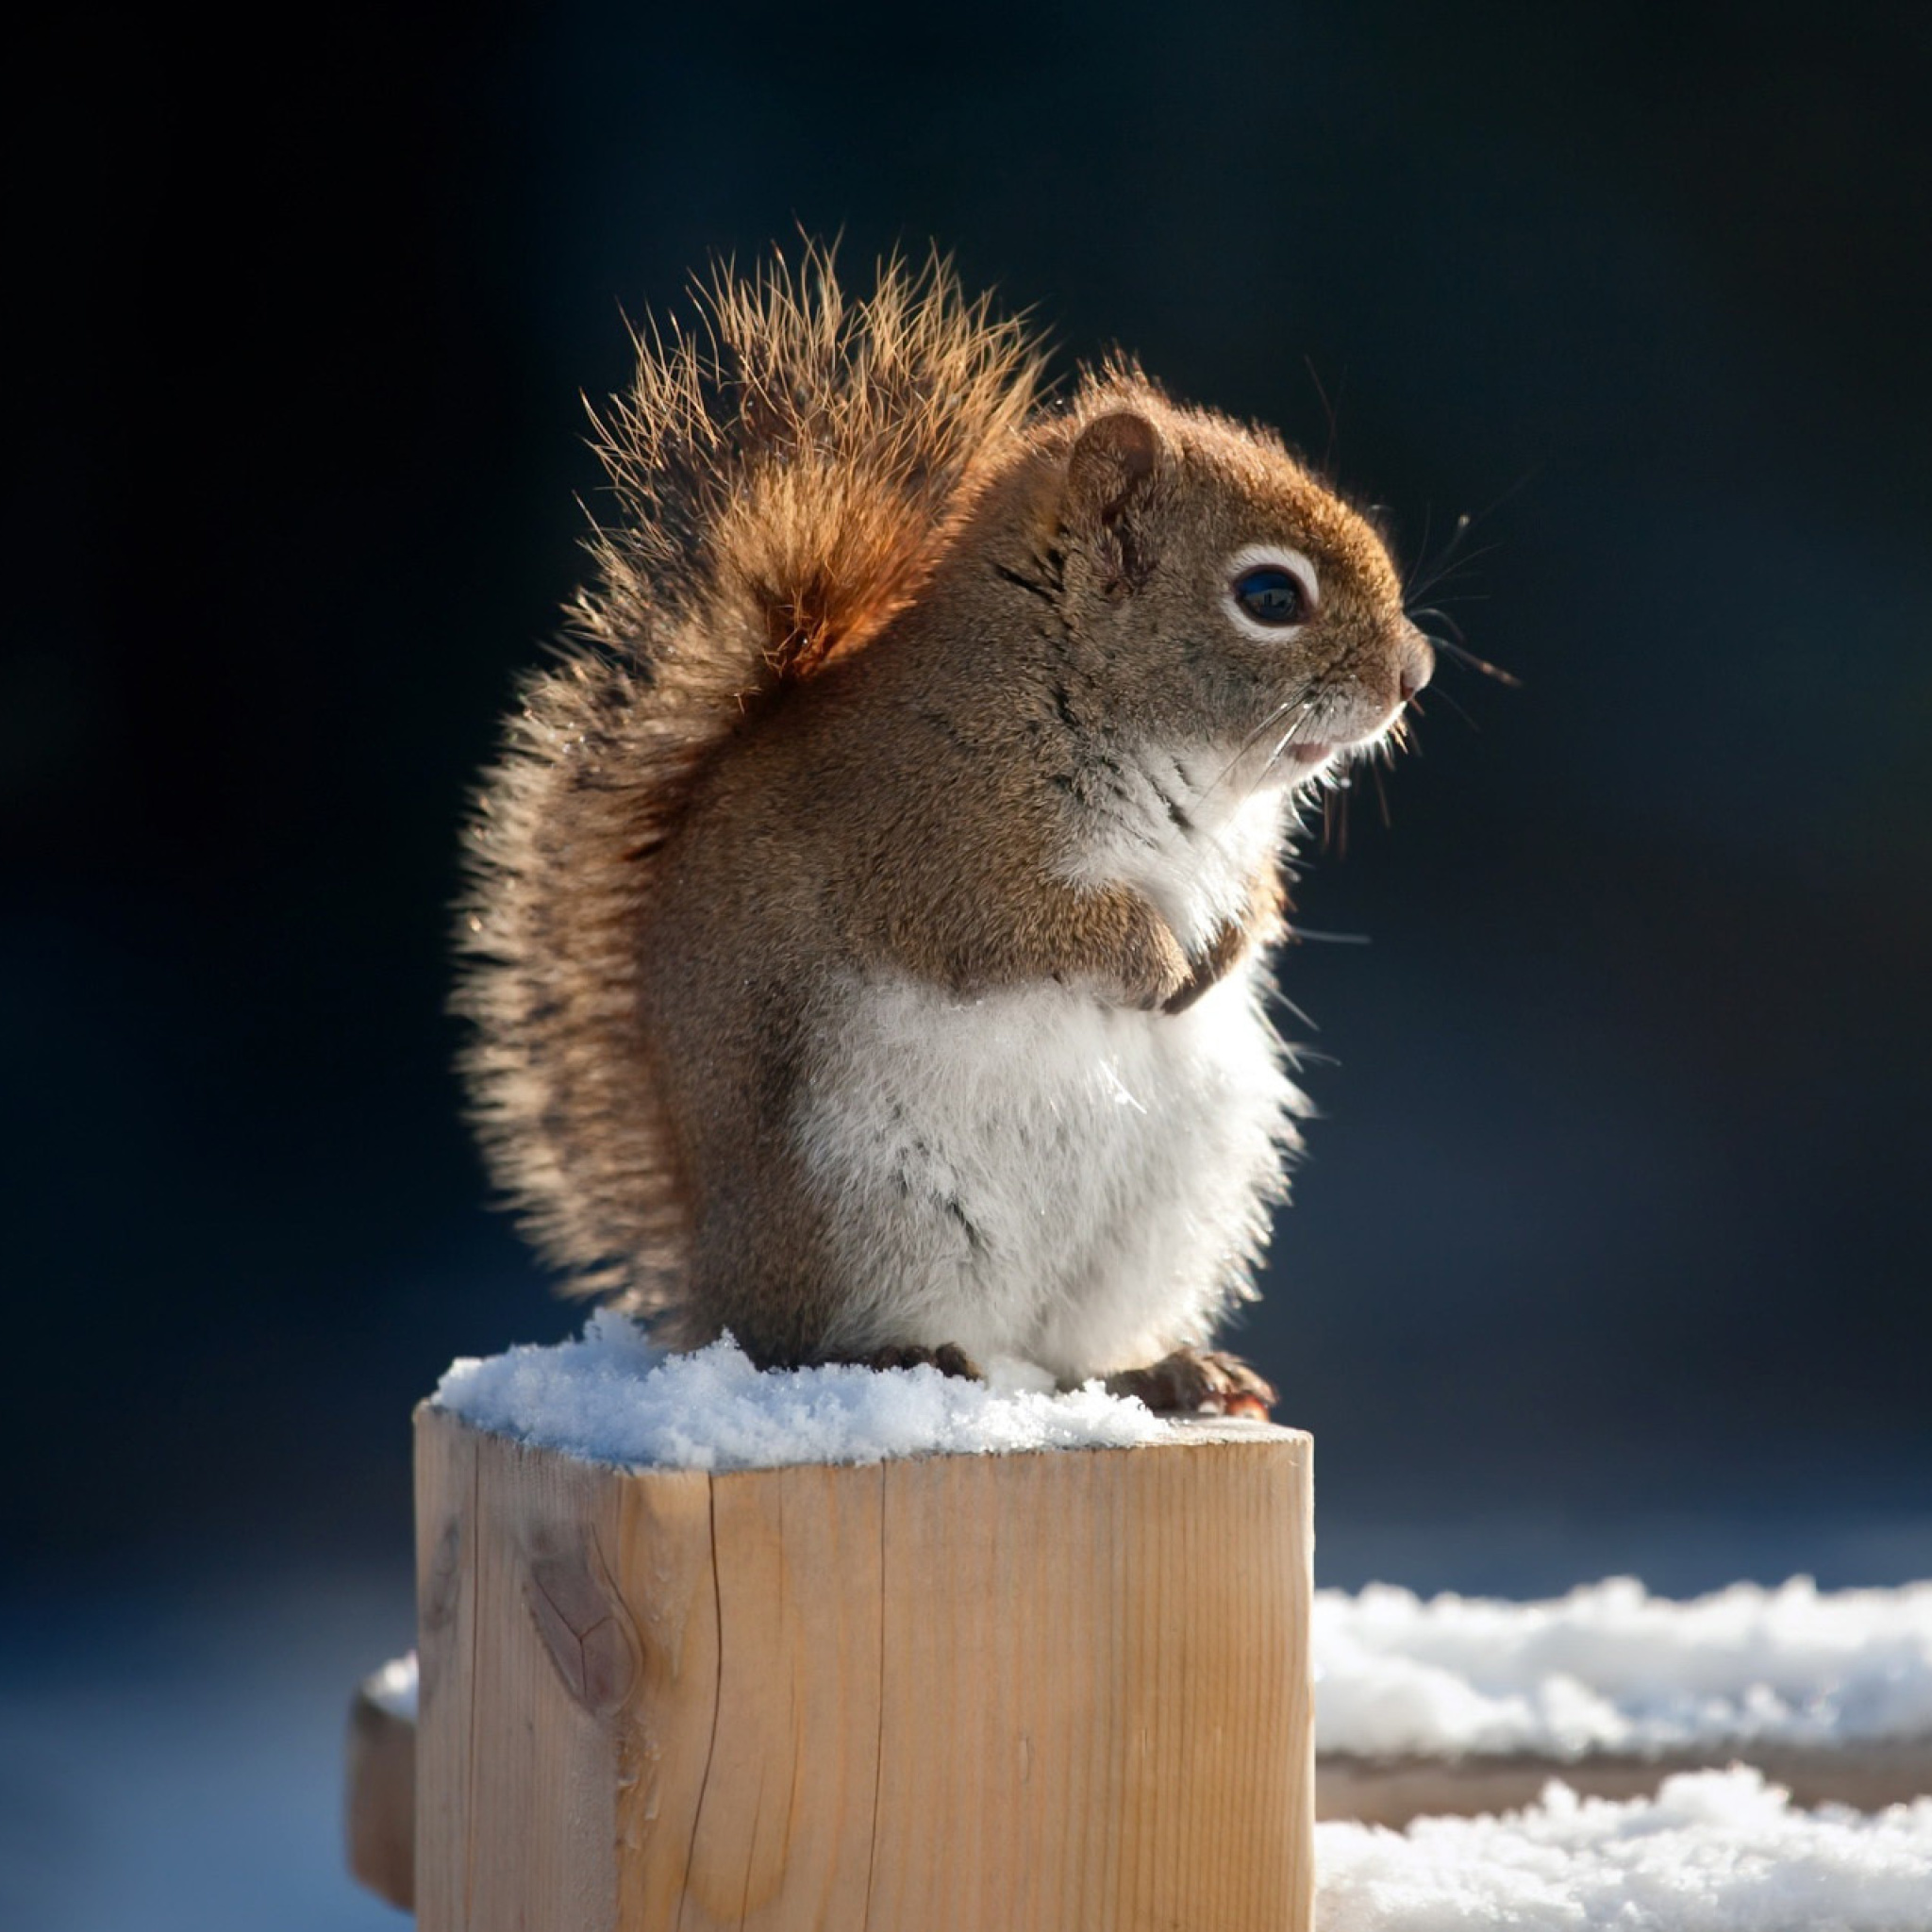 Cute squirrel in winter wallpaper 2048x2048